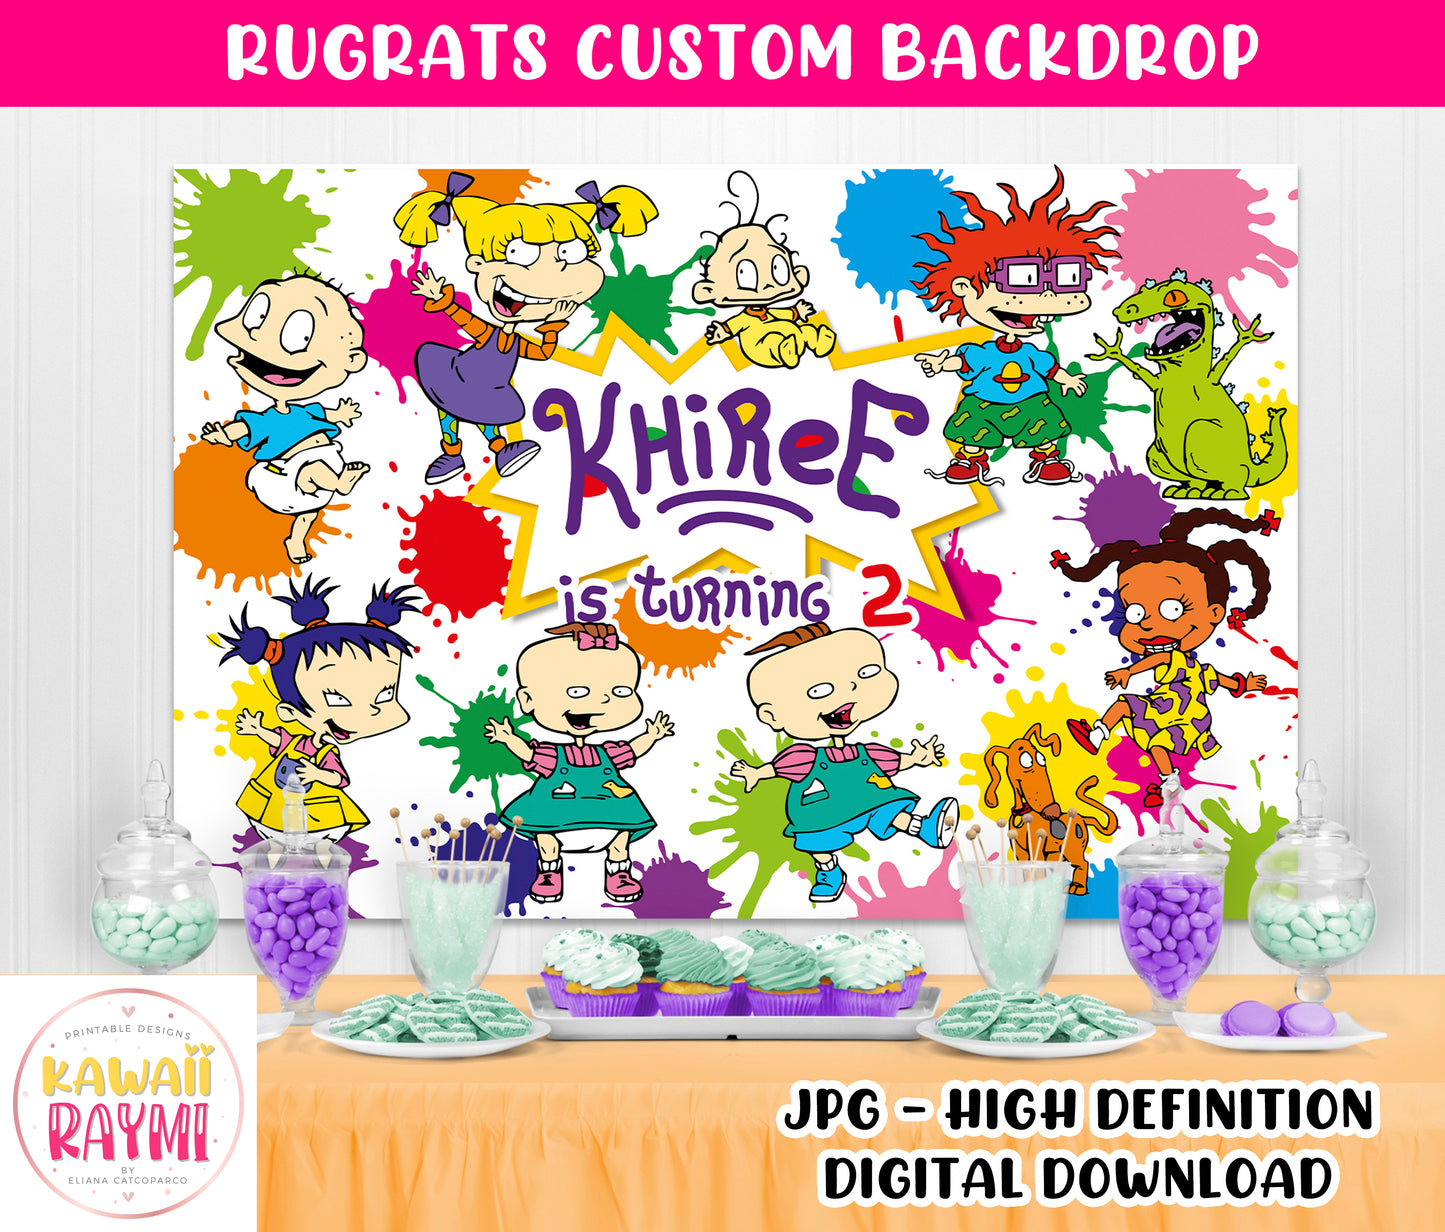 Rugrats custom backdrop, digital file, birthday party rugrats, custom backdrop rugrats